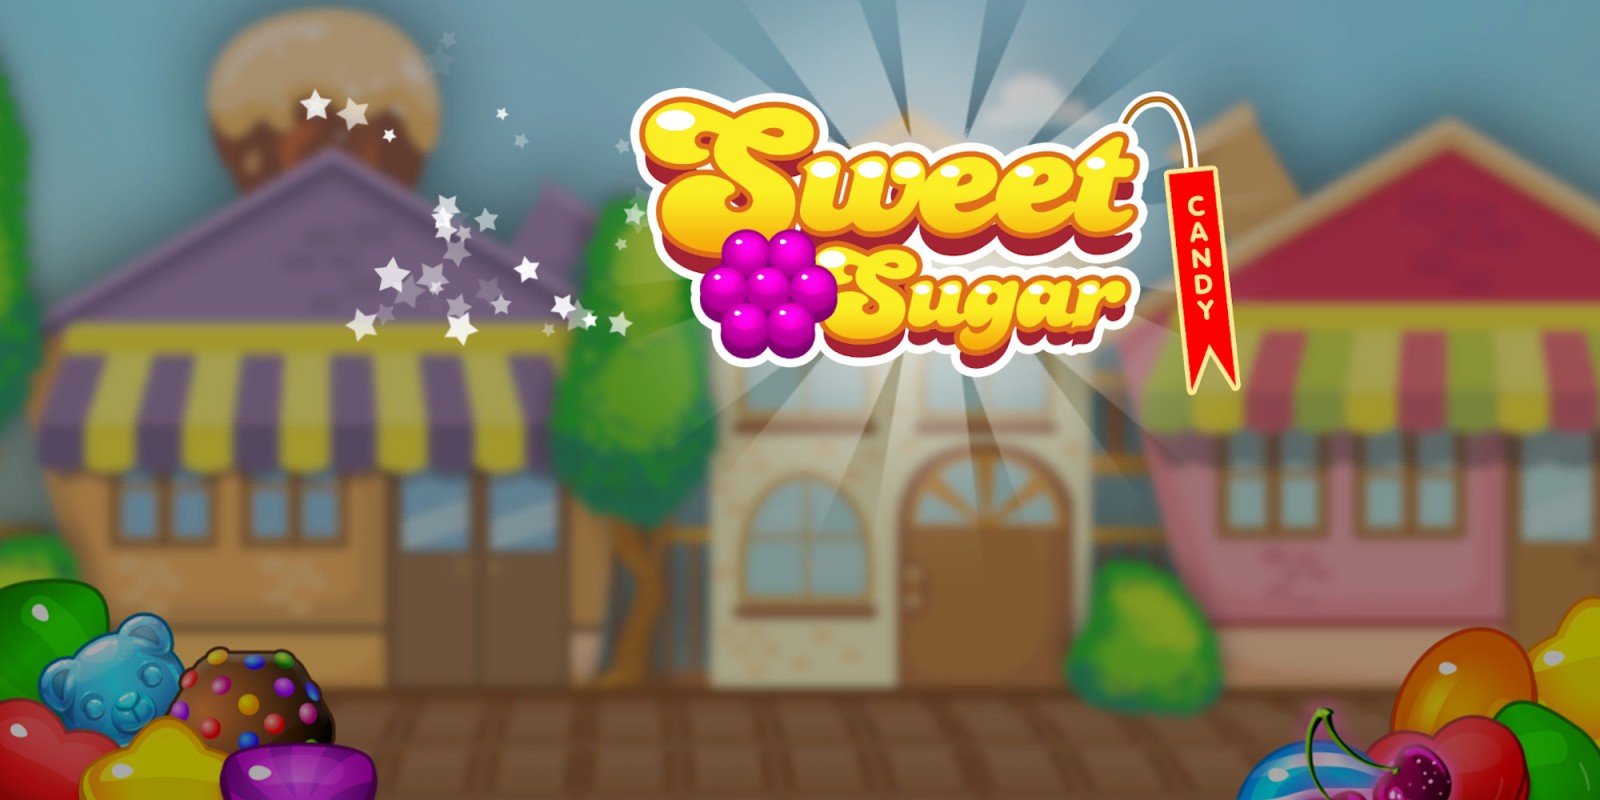 Sweet Sugar Candy